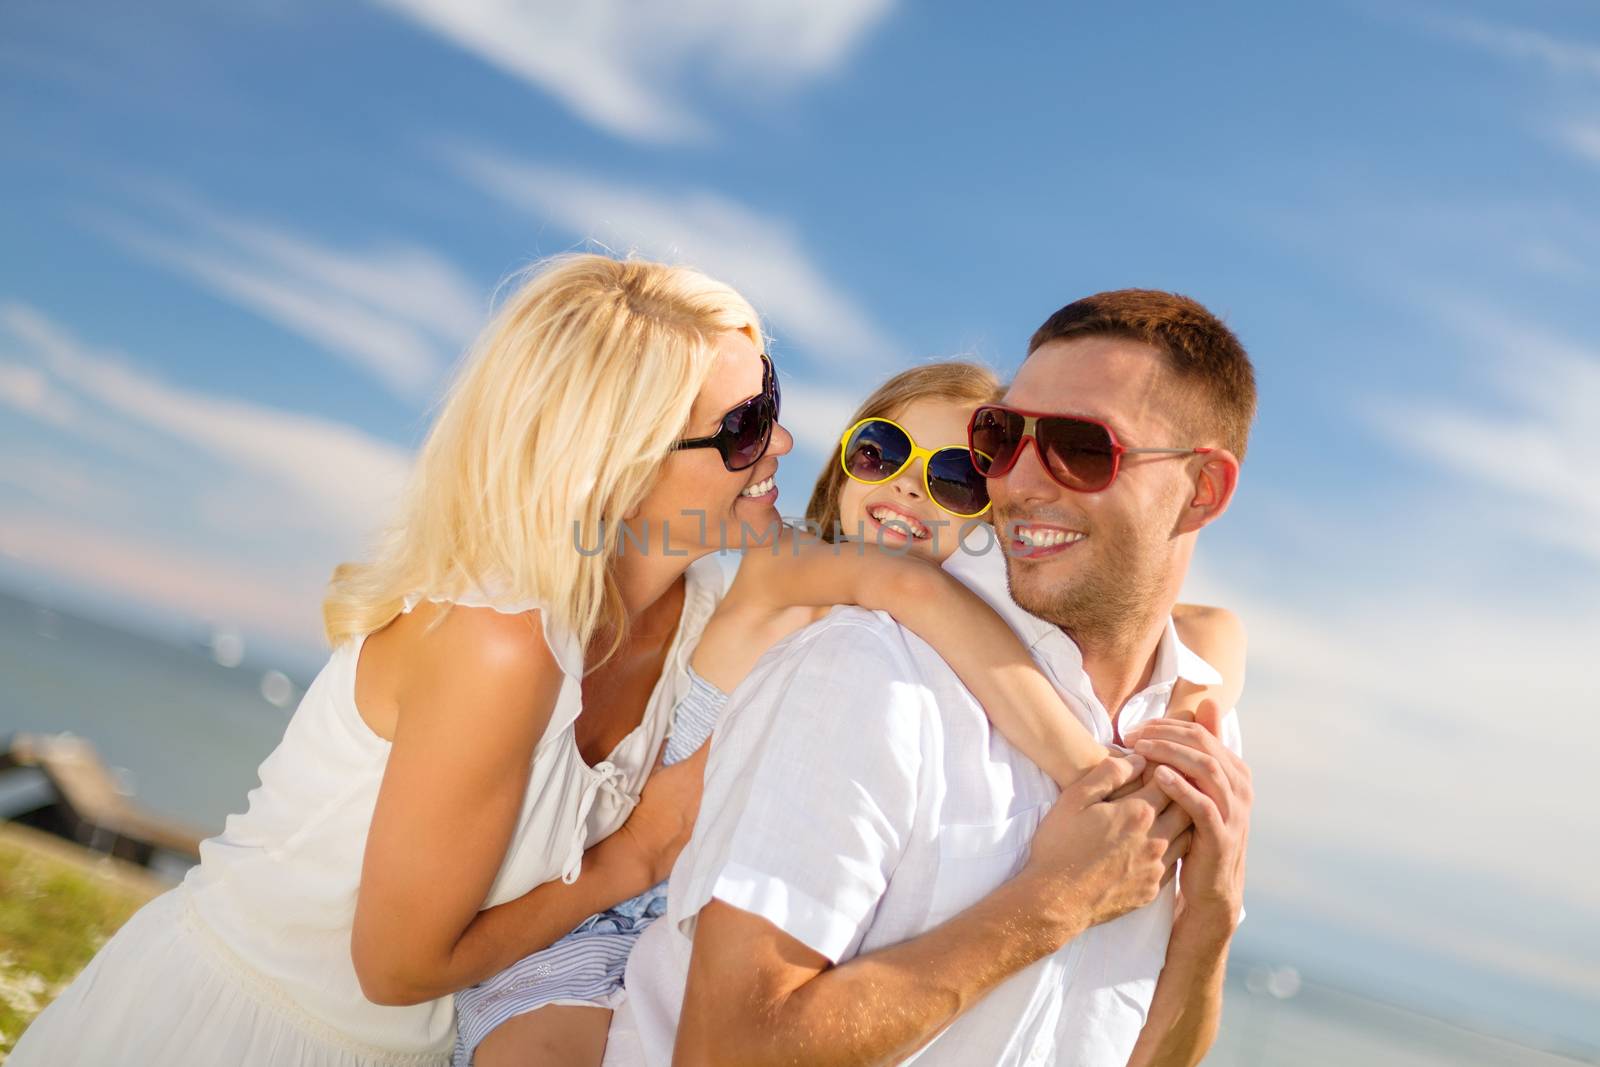 happy family in sunglasses having fun outdoors by dolgachov